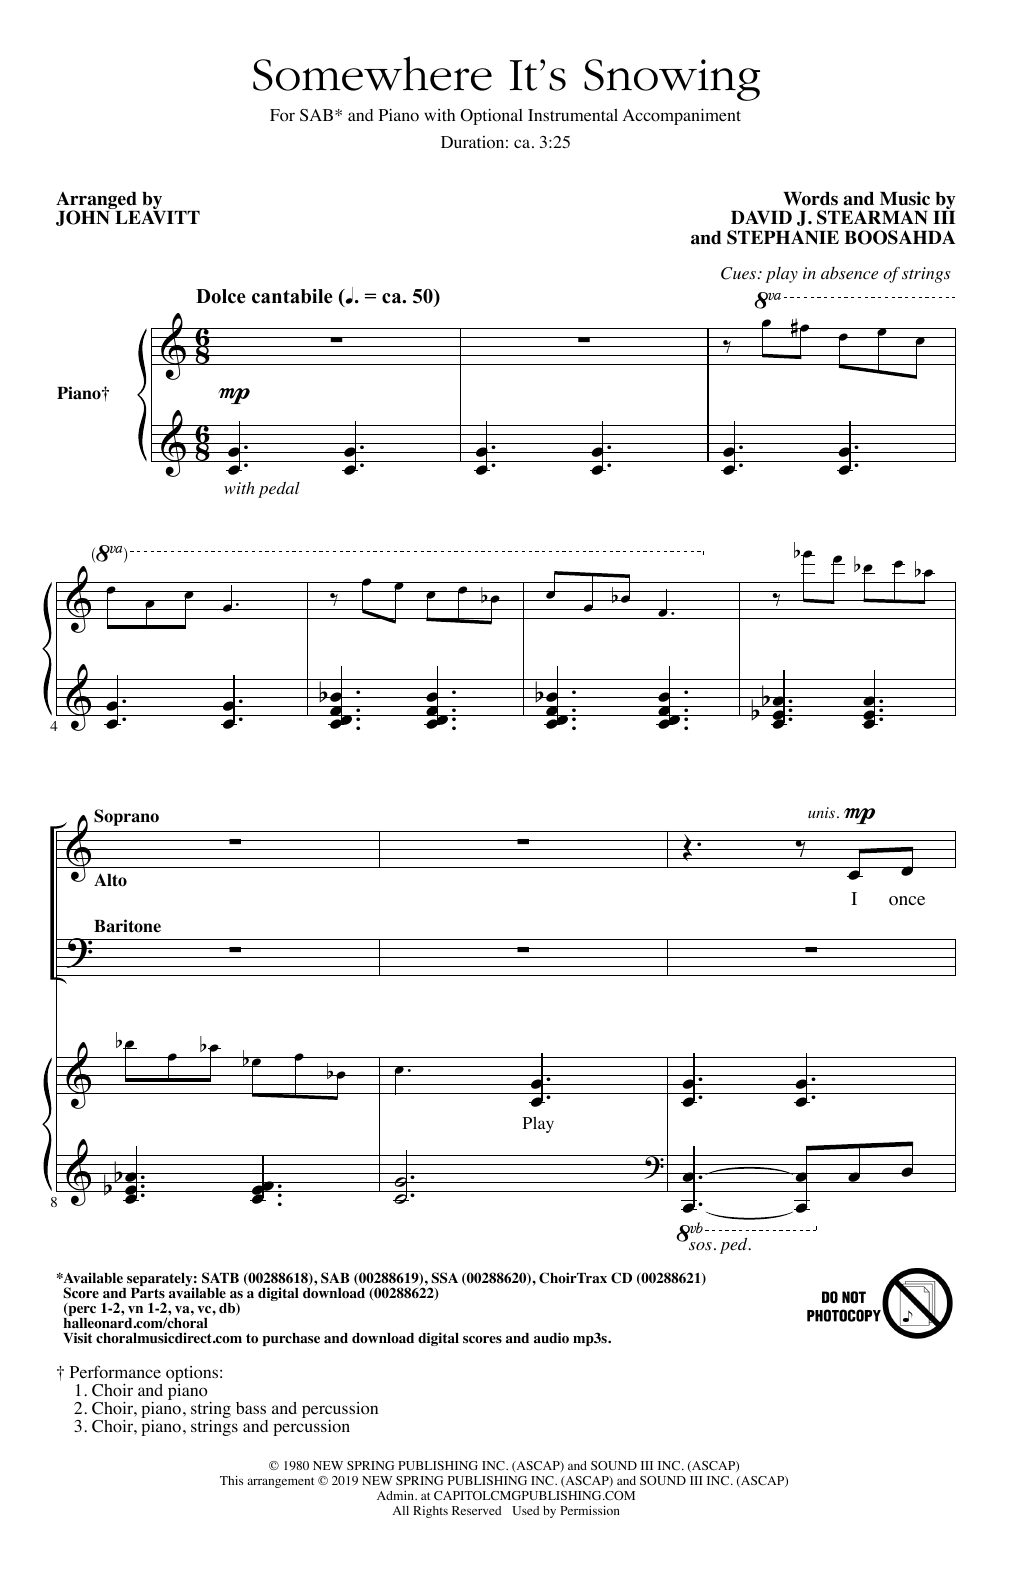 Download David J. Stearman III & Stephanie Boosahda Somewhere It's Snowing (arr. John Leavitt) Sheet Music and learn how to play SAB Choir PDF digital score in minutes